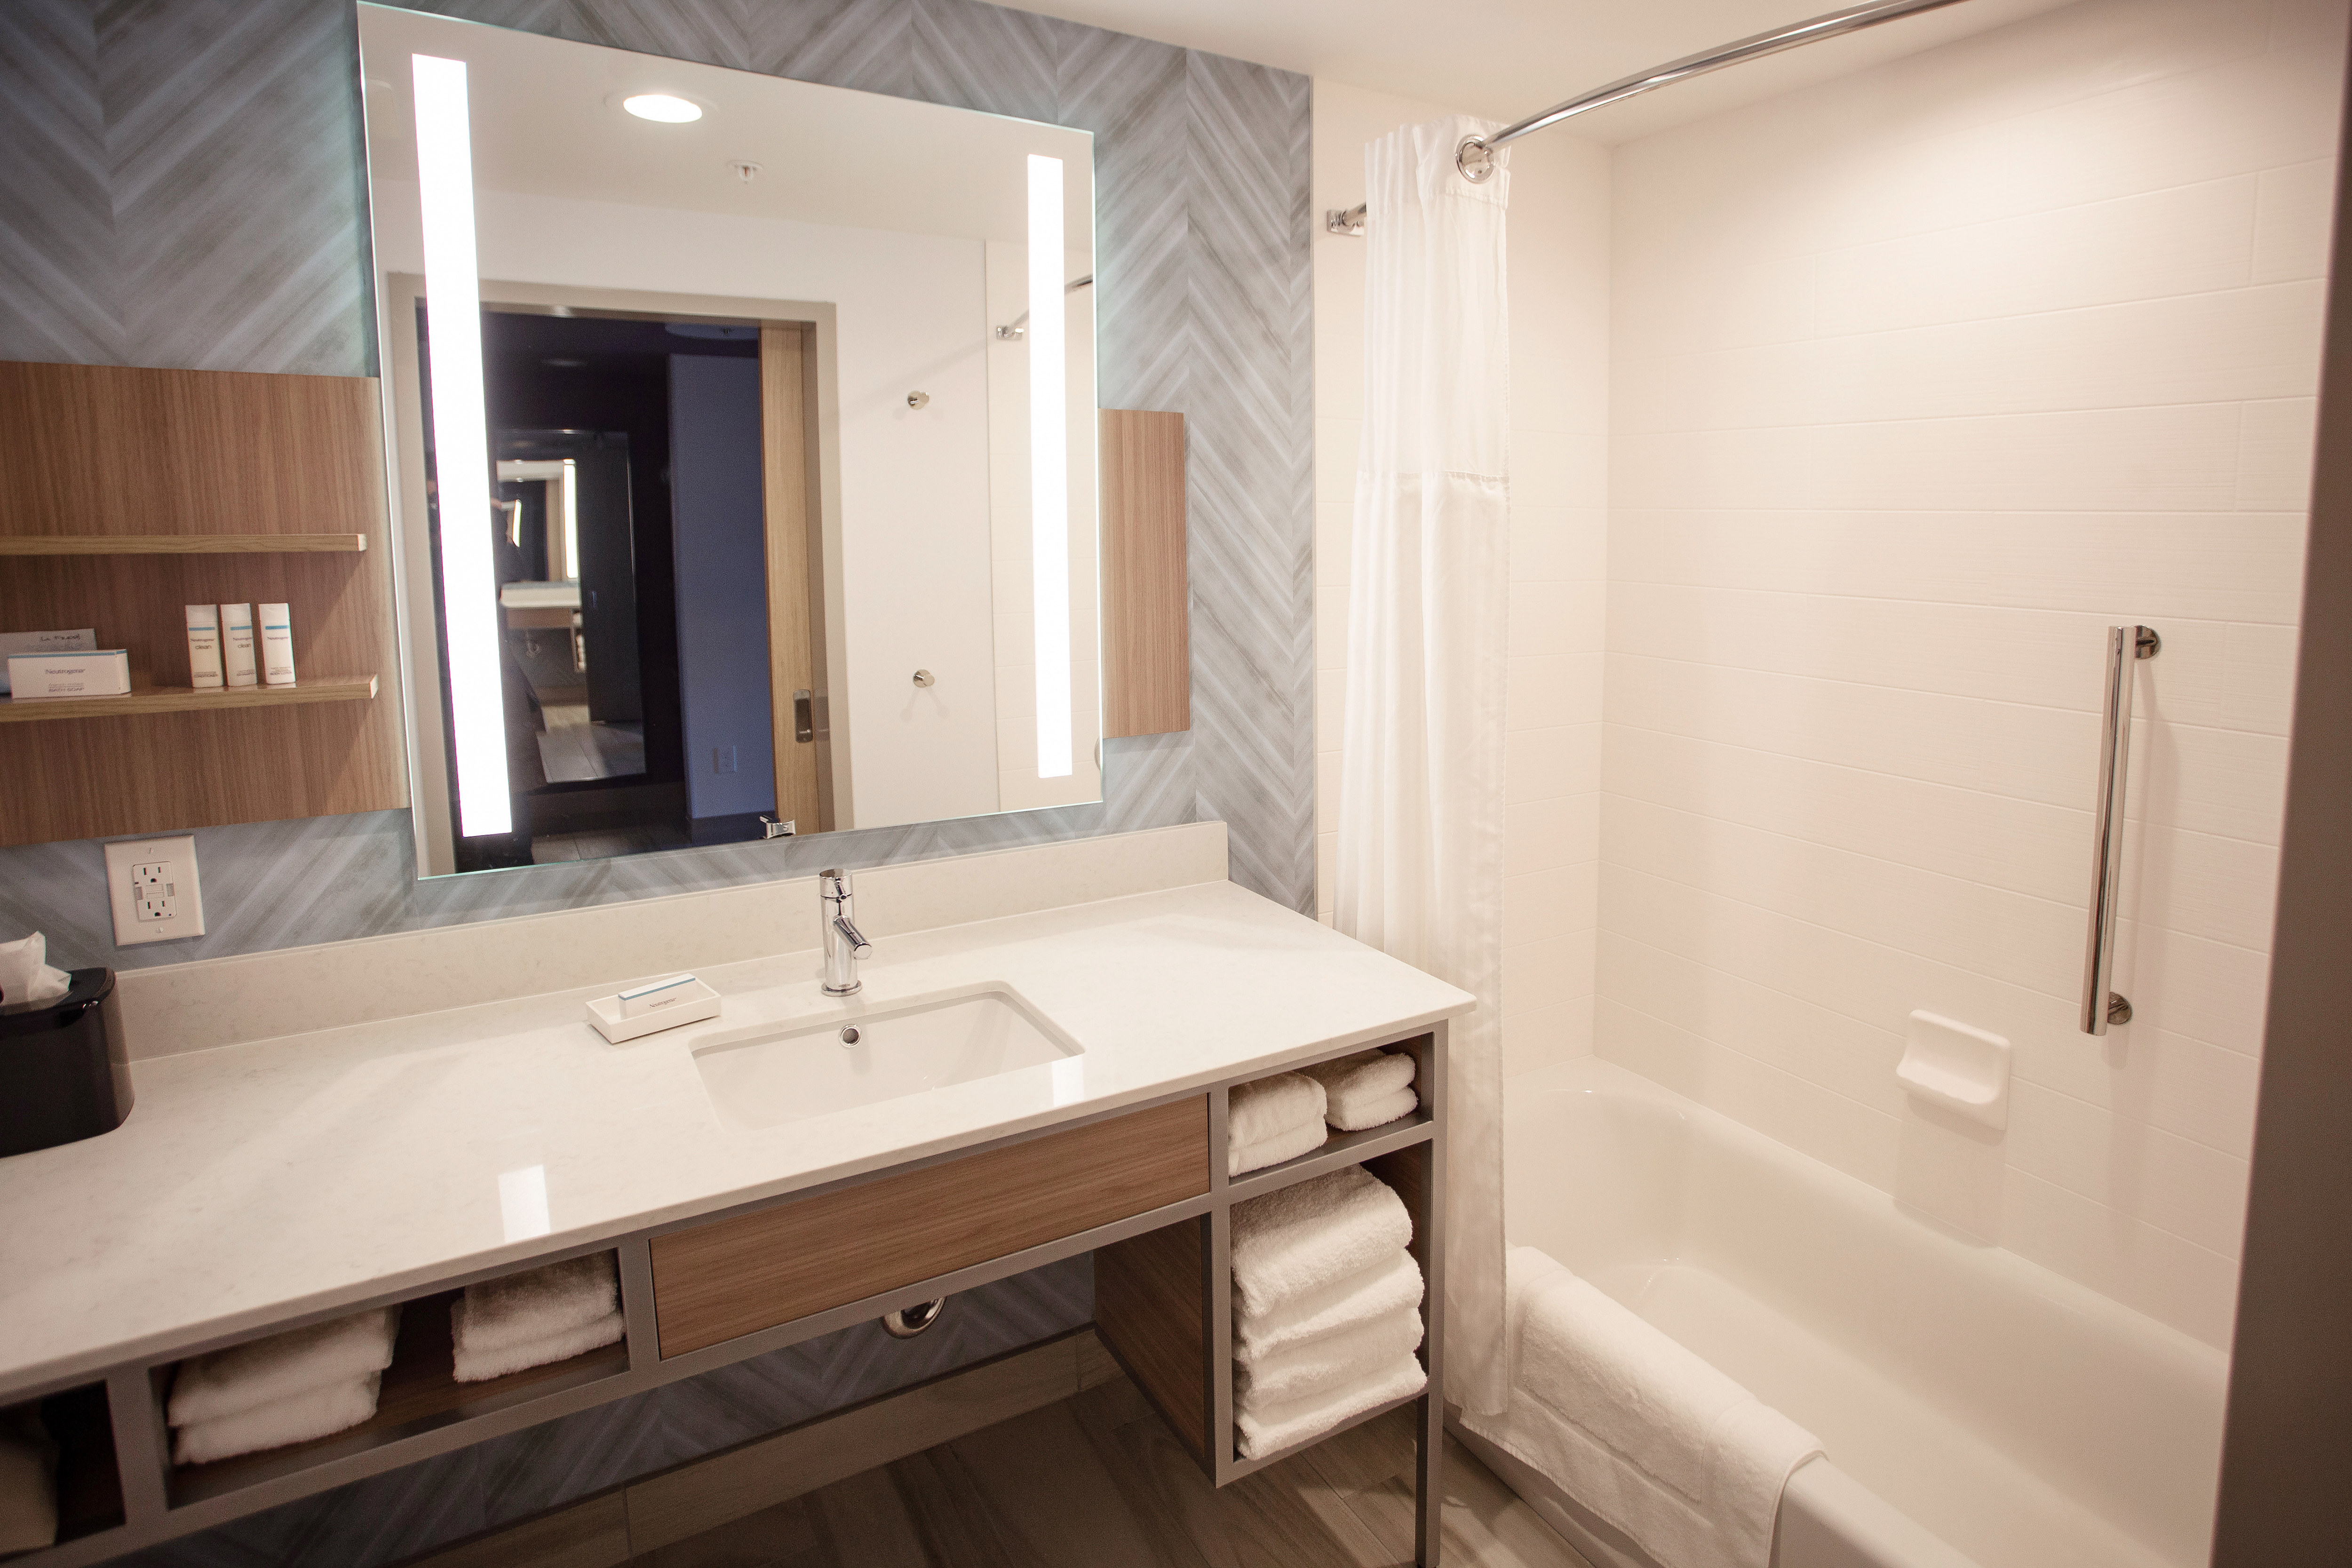 Bathroom Vanity Area and Bathtub in Guest Room